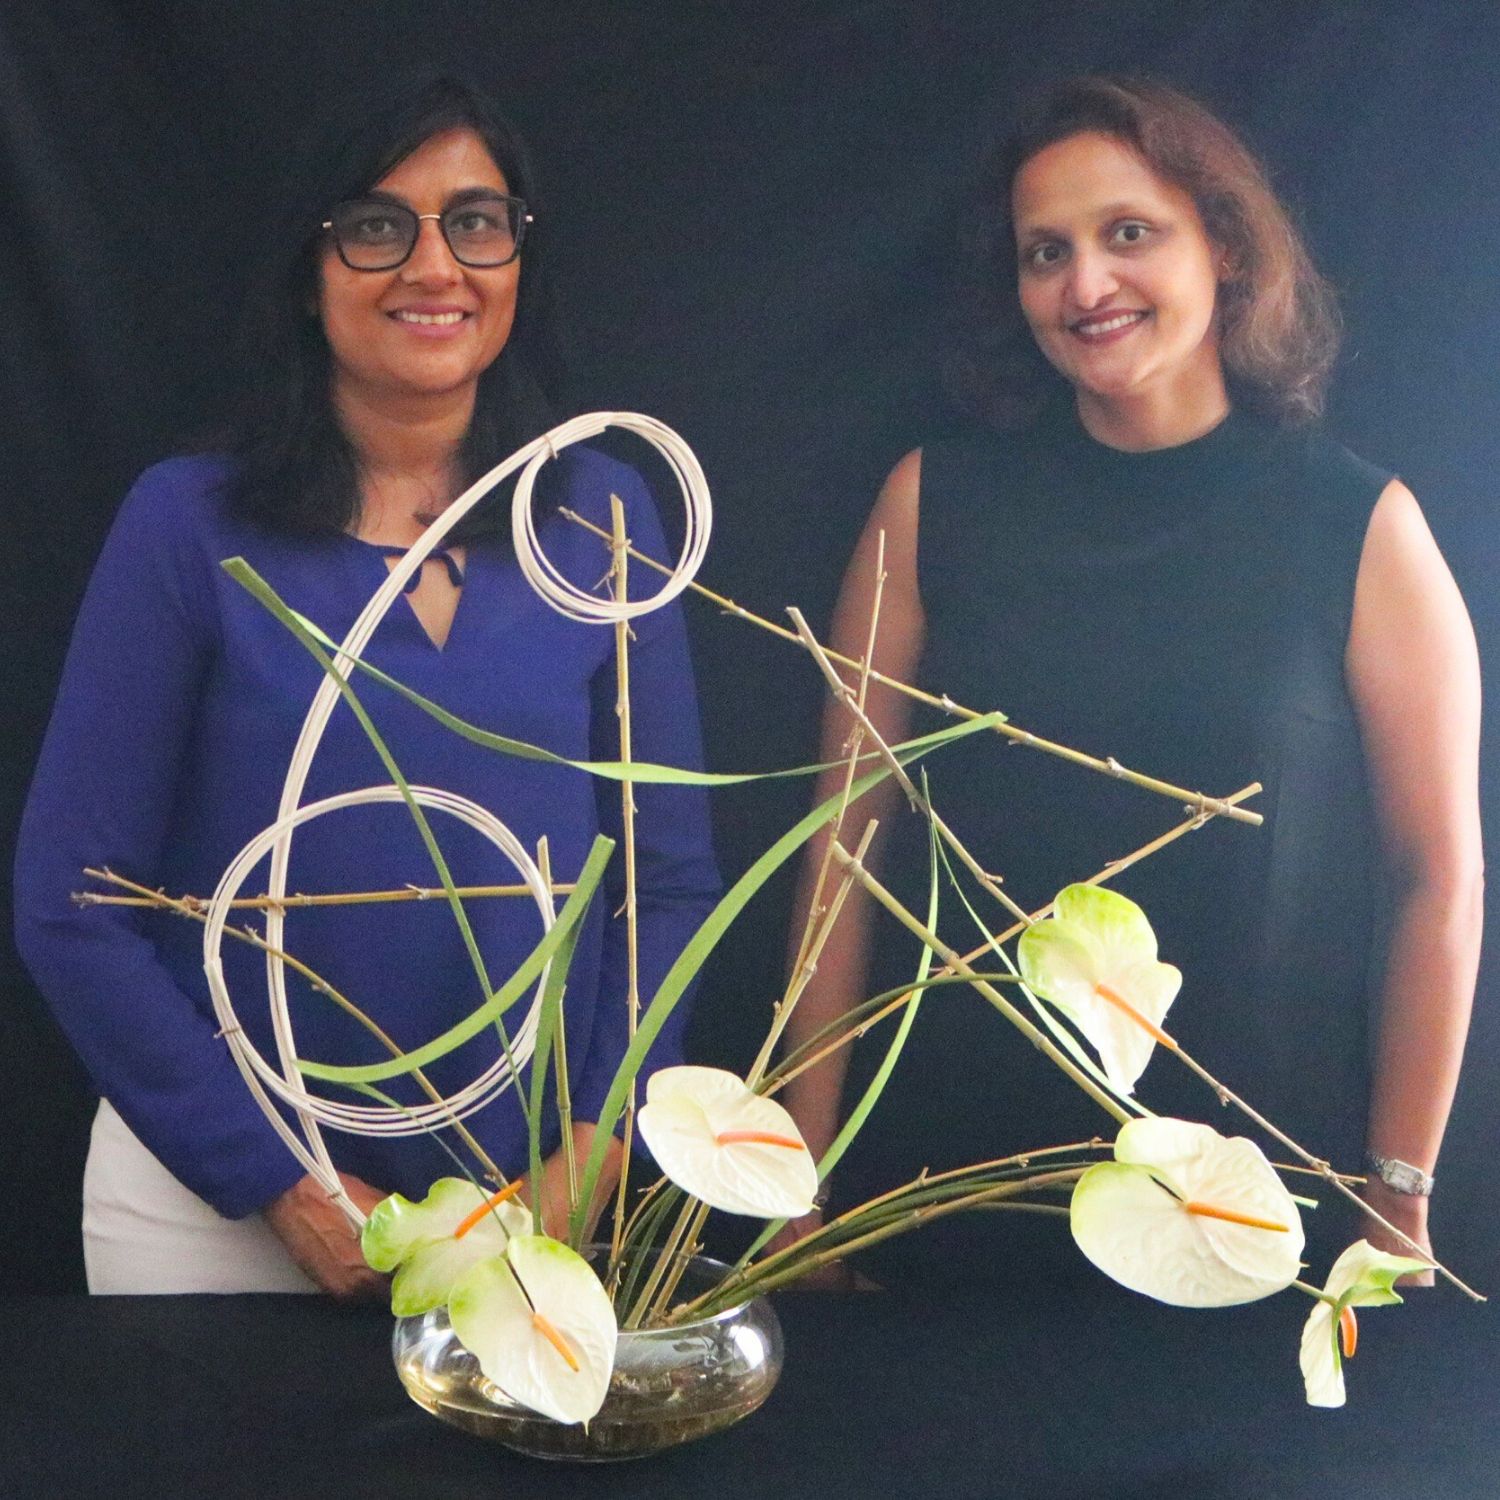 Rupal Chandaria and Arti Doshi floral designers